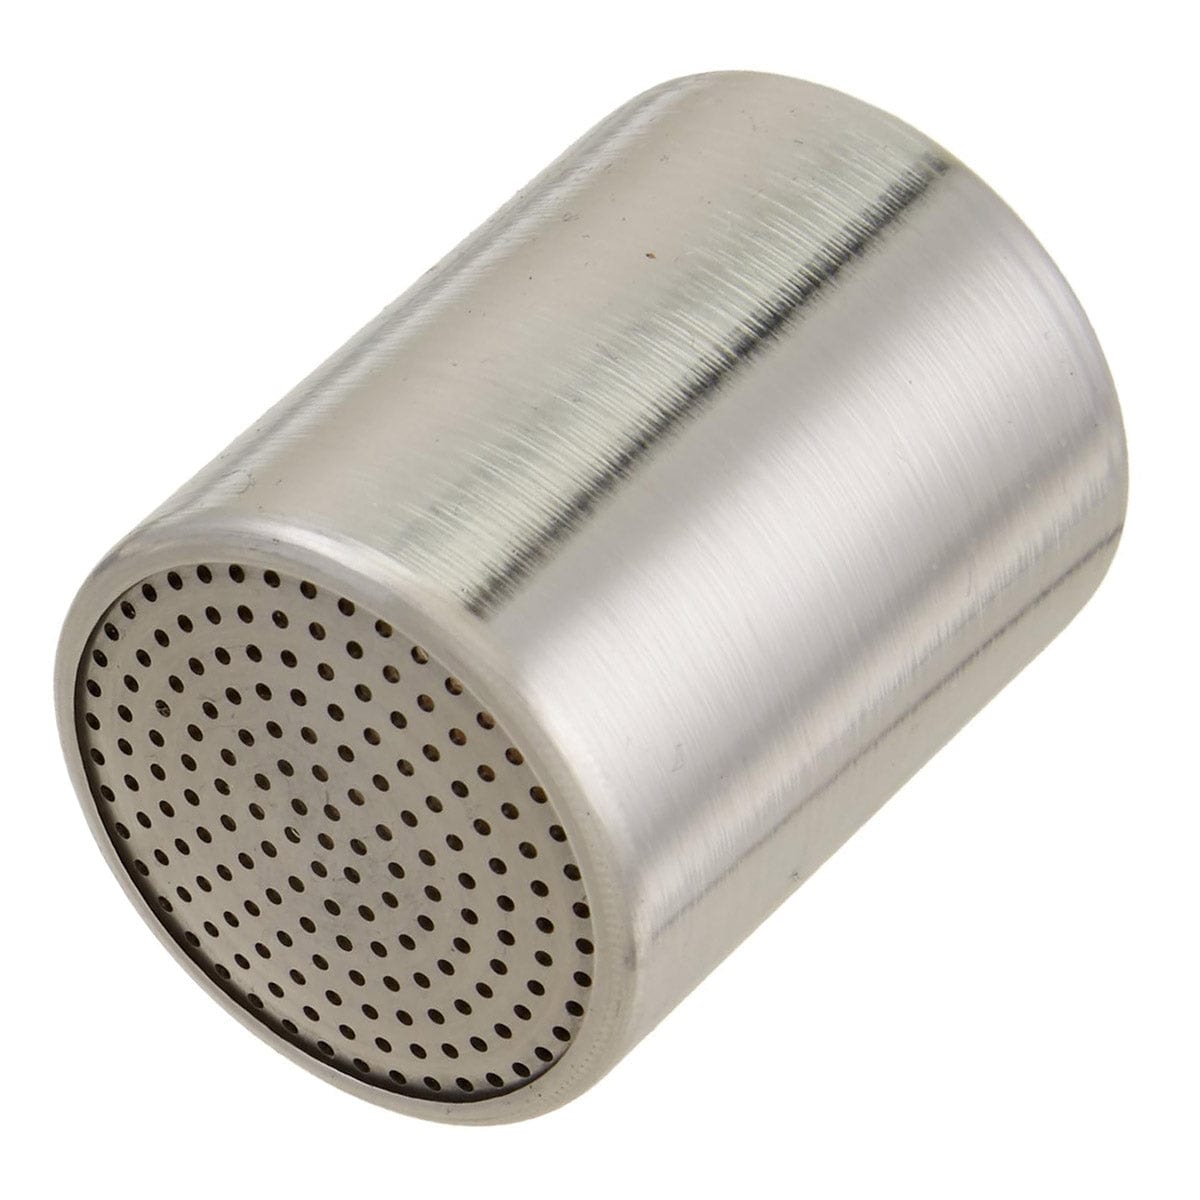 Dramm 170 Aluminum Water Breaker 1" Nozzle